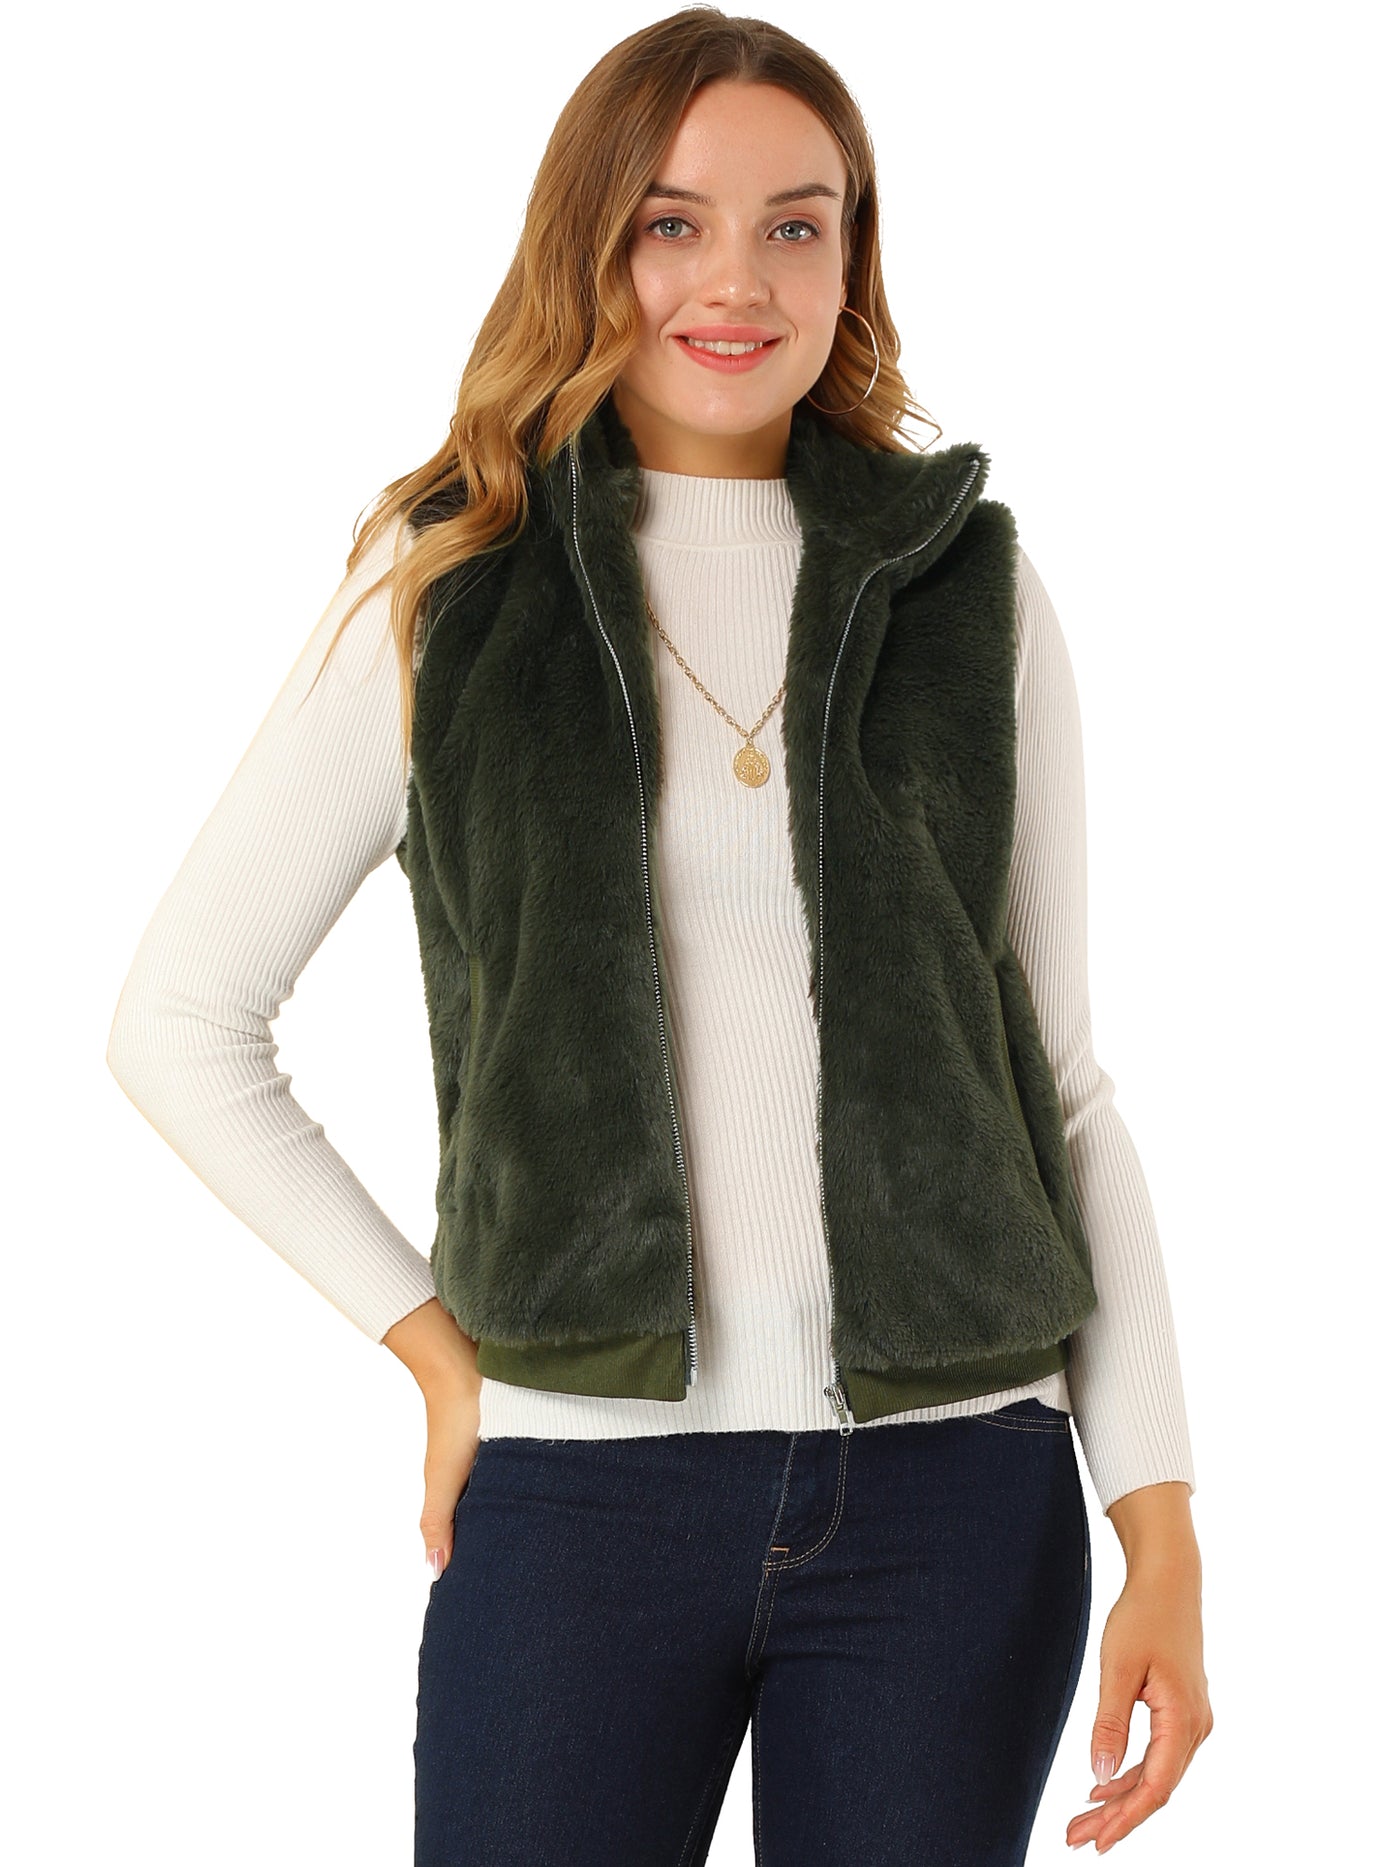 Allegra K Stand Collar Zip Warm Sleeveless Gilet Faux Fur Jackets Vest